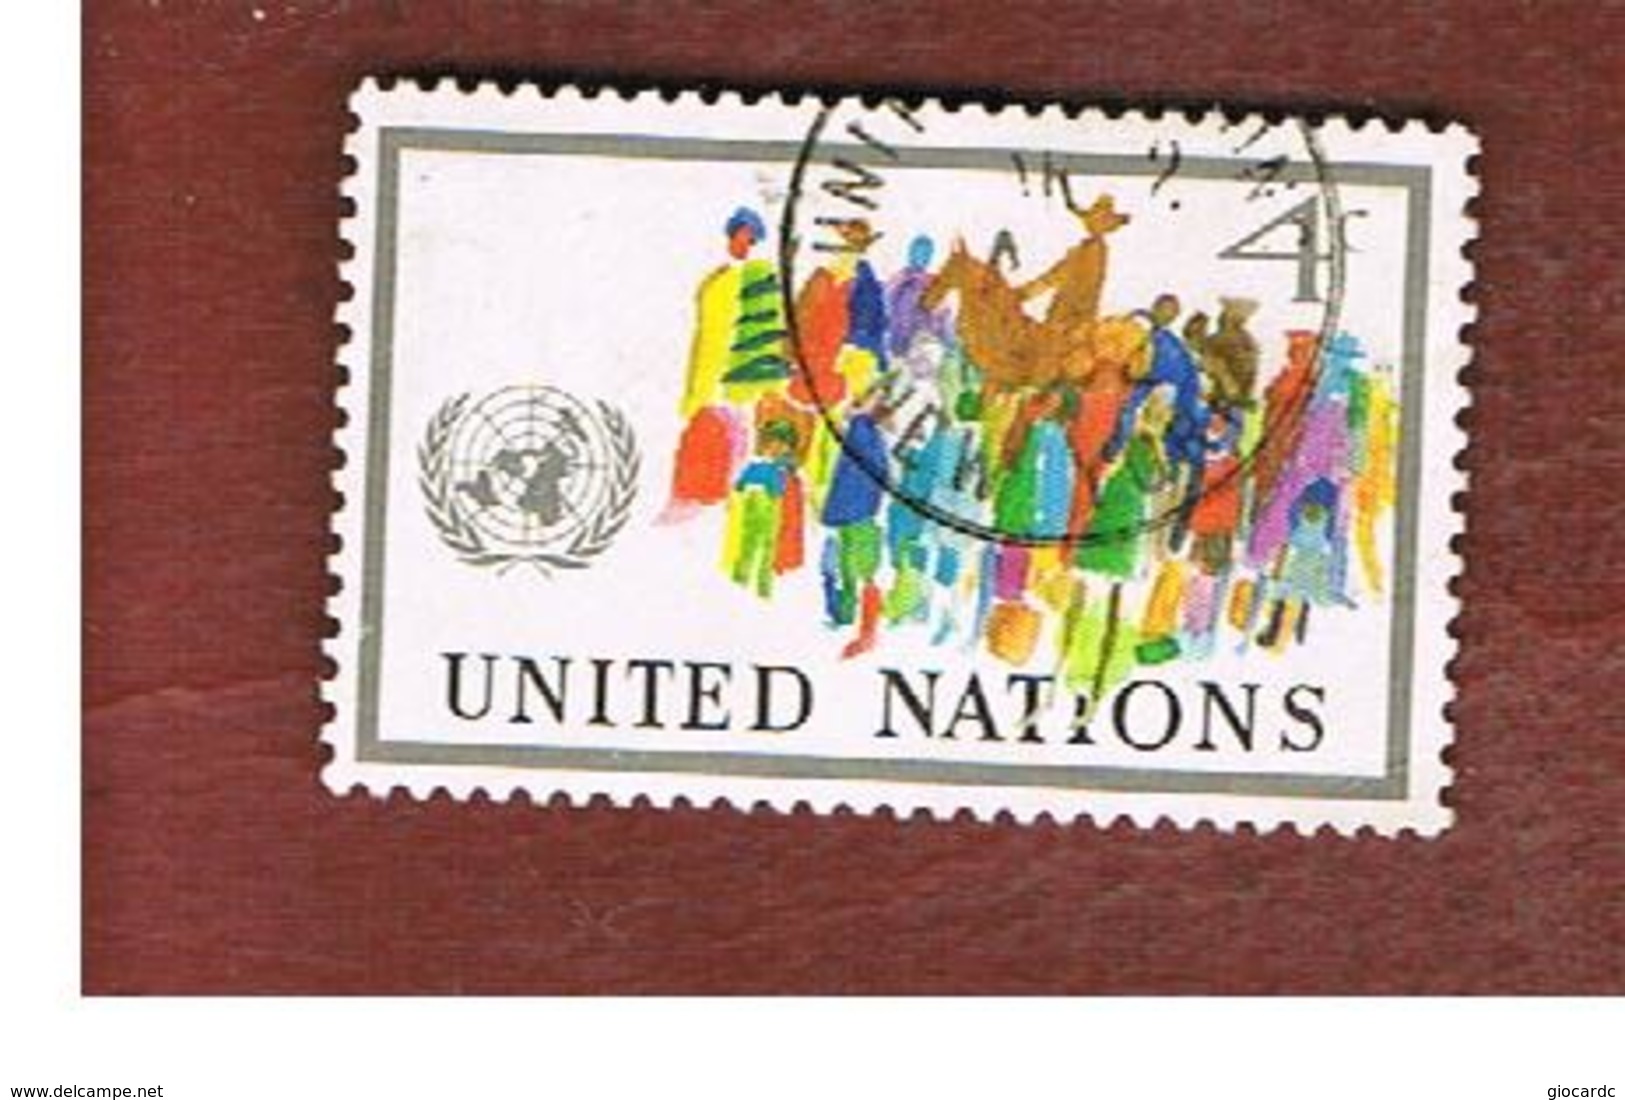 ONU (UNITED NATIONS) NEW YORK   - SG NY275   -  1976 GATHERING OF PEOPLES  - USED - Usati